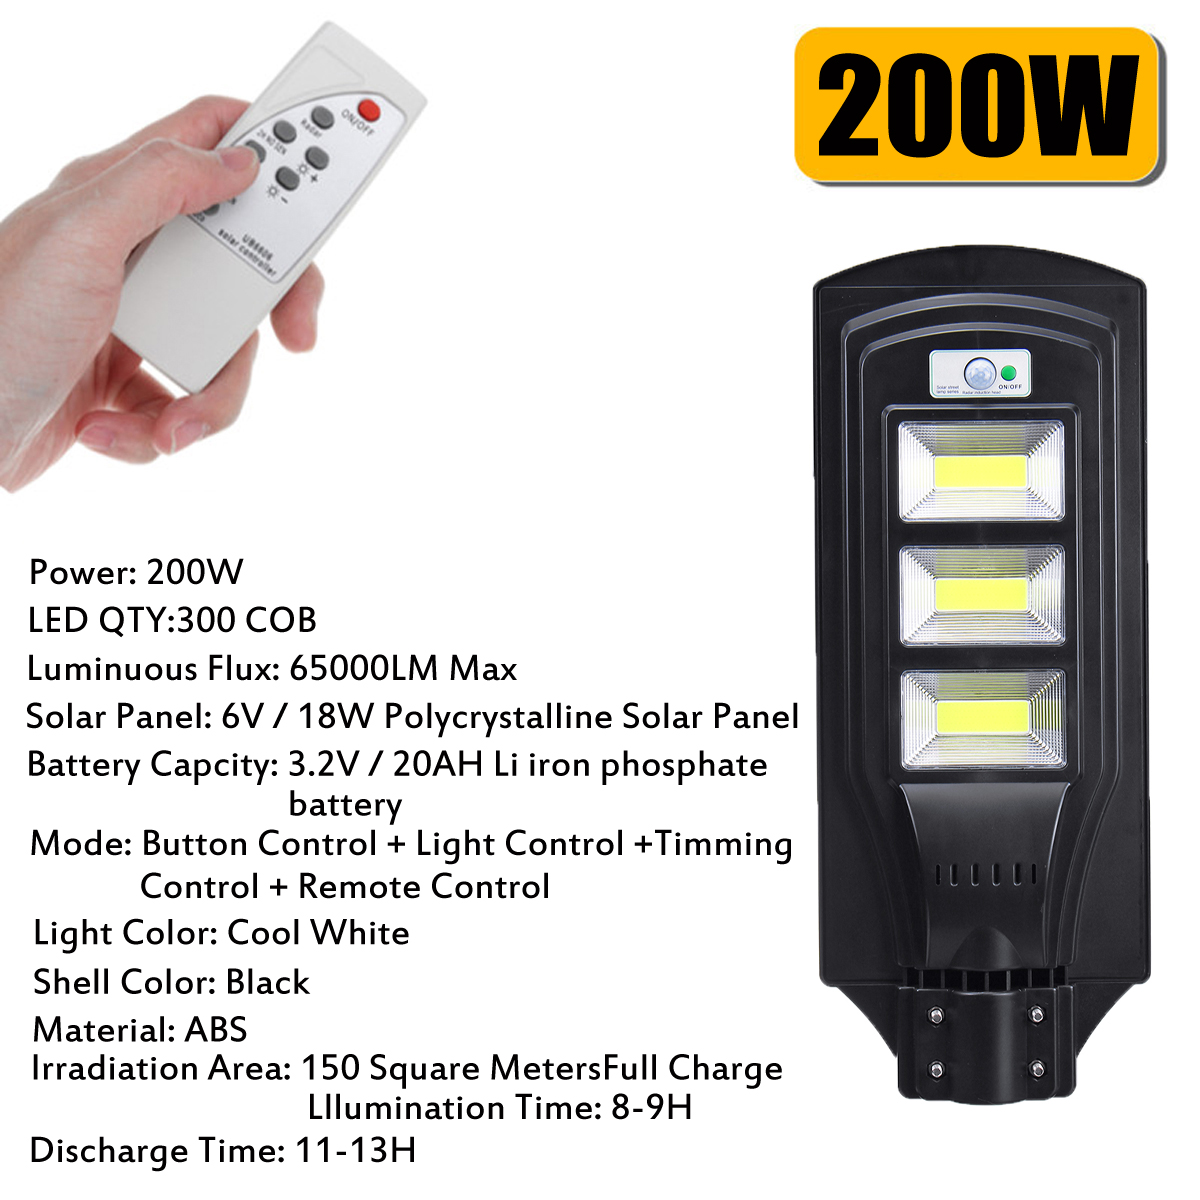 100/200/300COB LED Solar Street Light PIR Motion Sensor Outdoor Wall Lamp+Remote Control